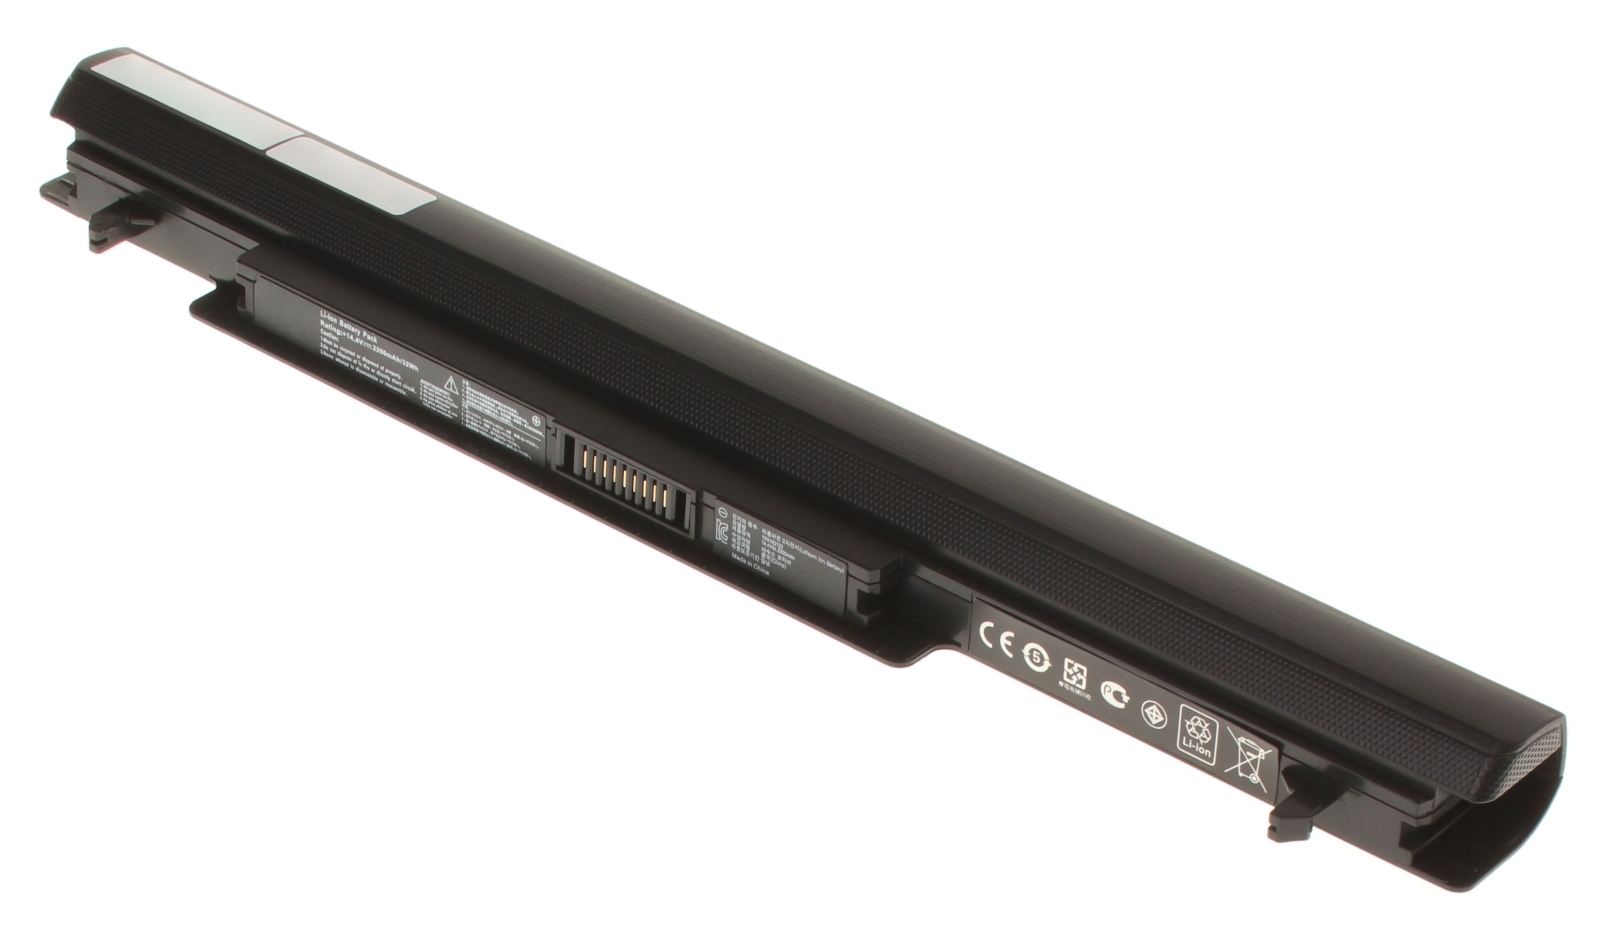 Ноутбук Asus K56cb-Xo129h Цена